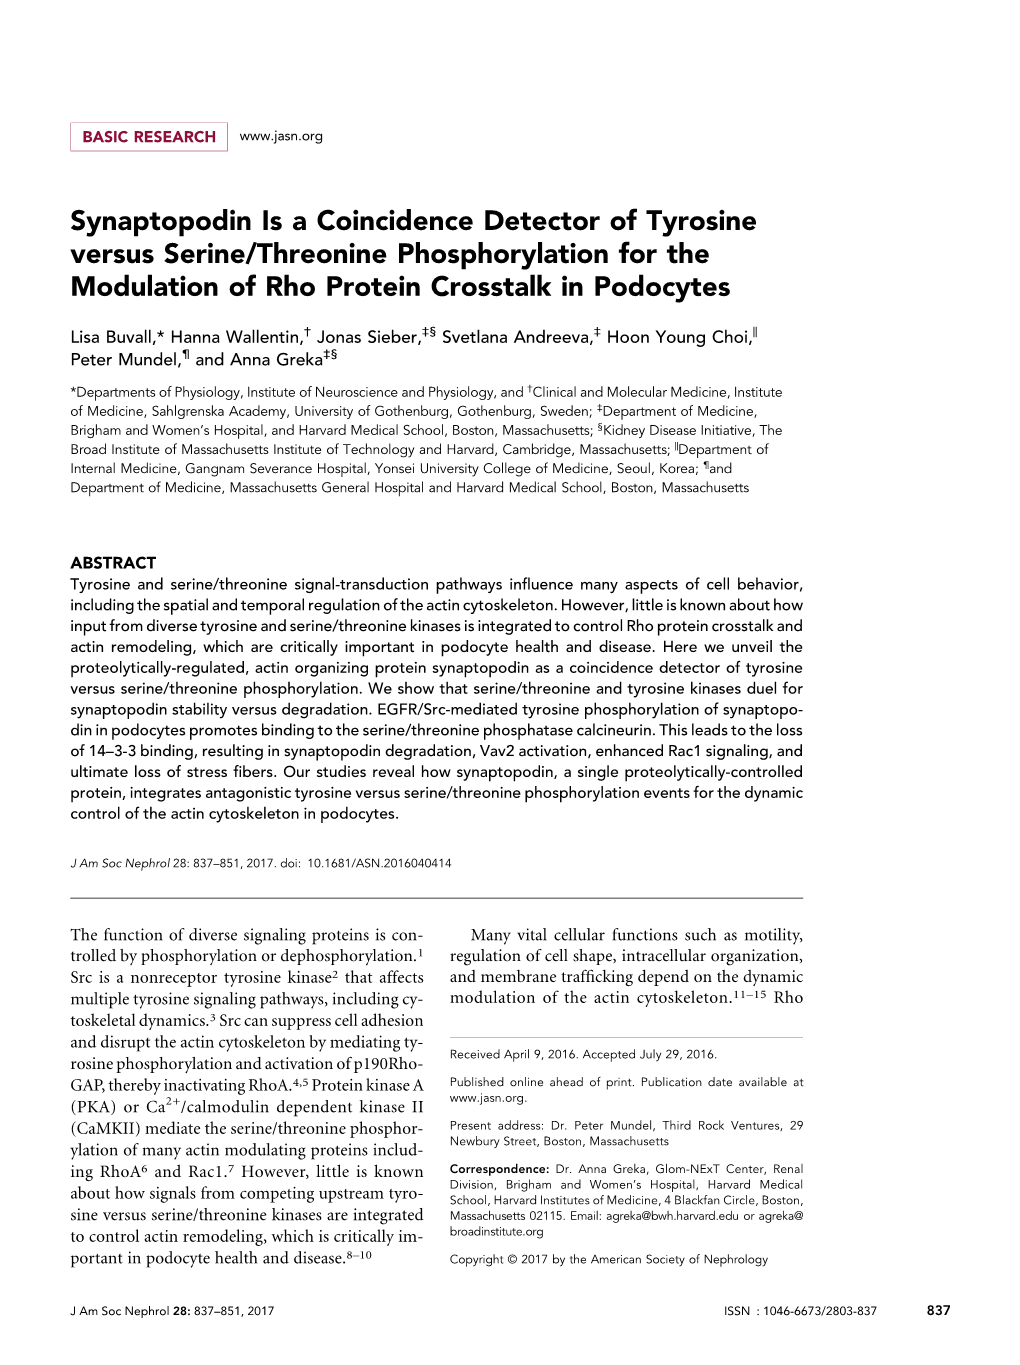 Synaptopodin Is a Coincidence Detector of Tyrosine Versus Serine/Threonine Phosphorylation for the Modulation of Rho Protein Crosstalk in Podocytes